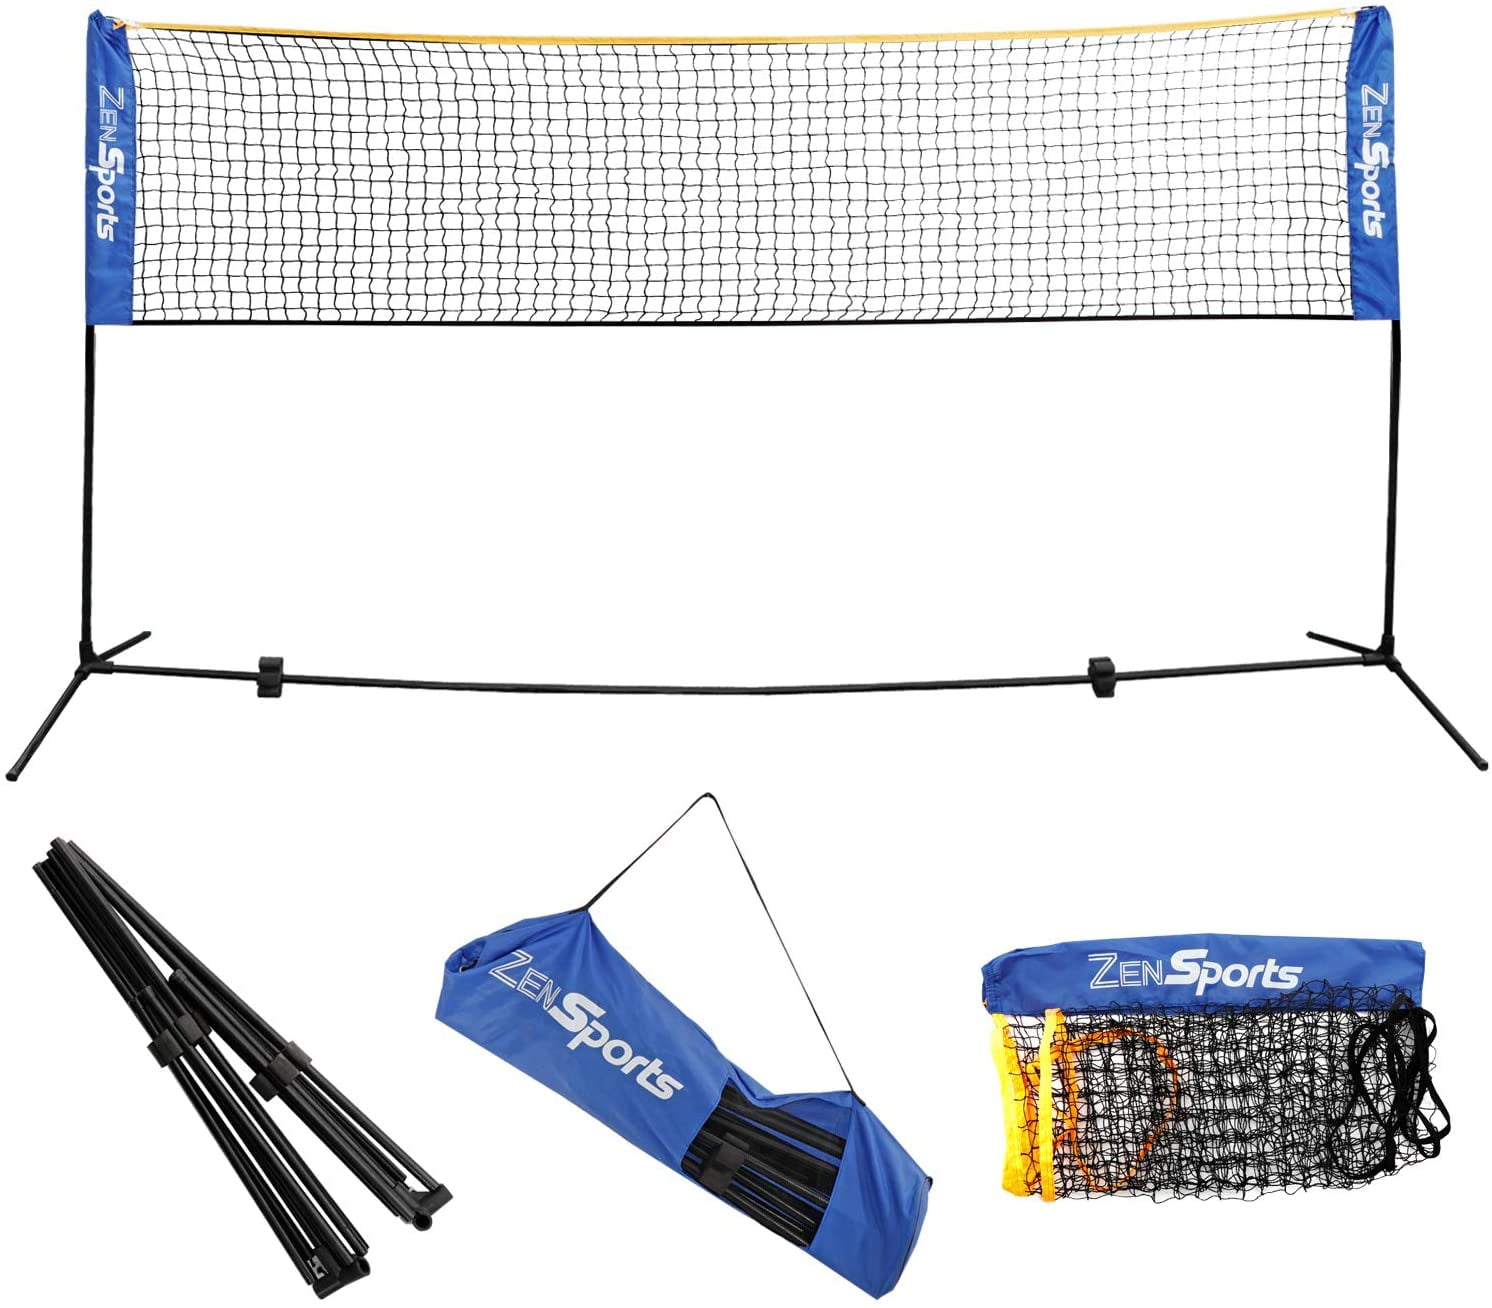 Foldable badminton tennis volleyball net frame portable outdoor suit beach sport 